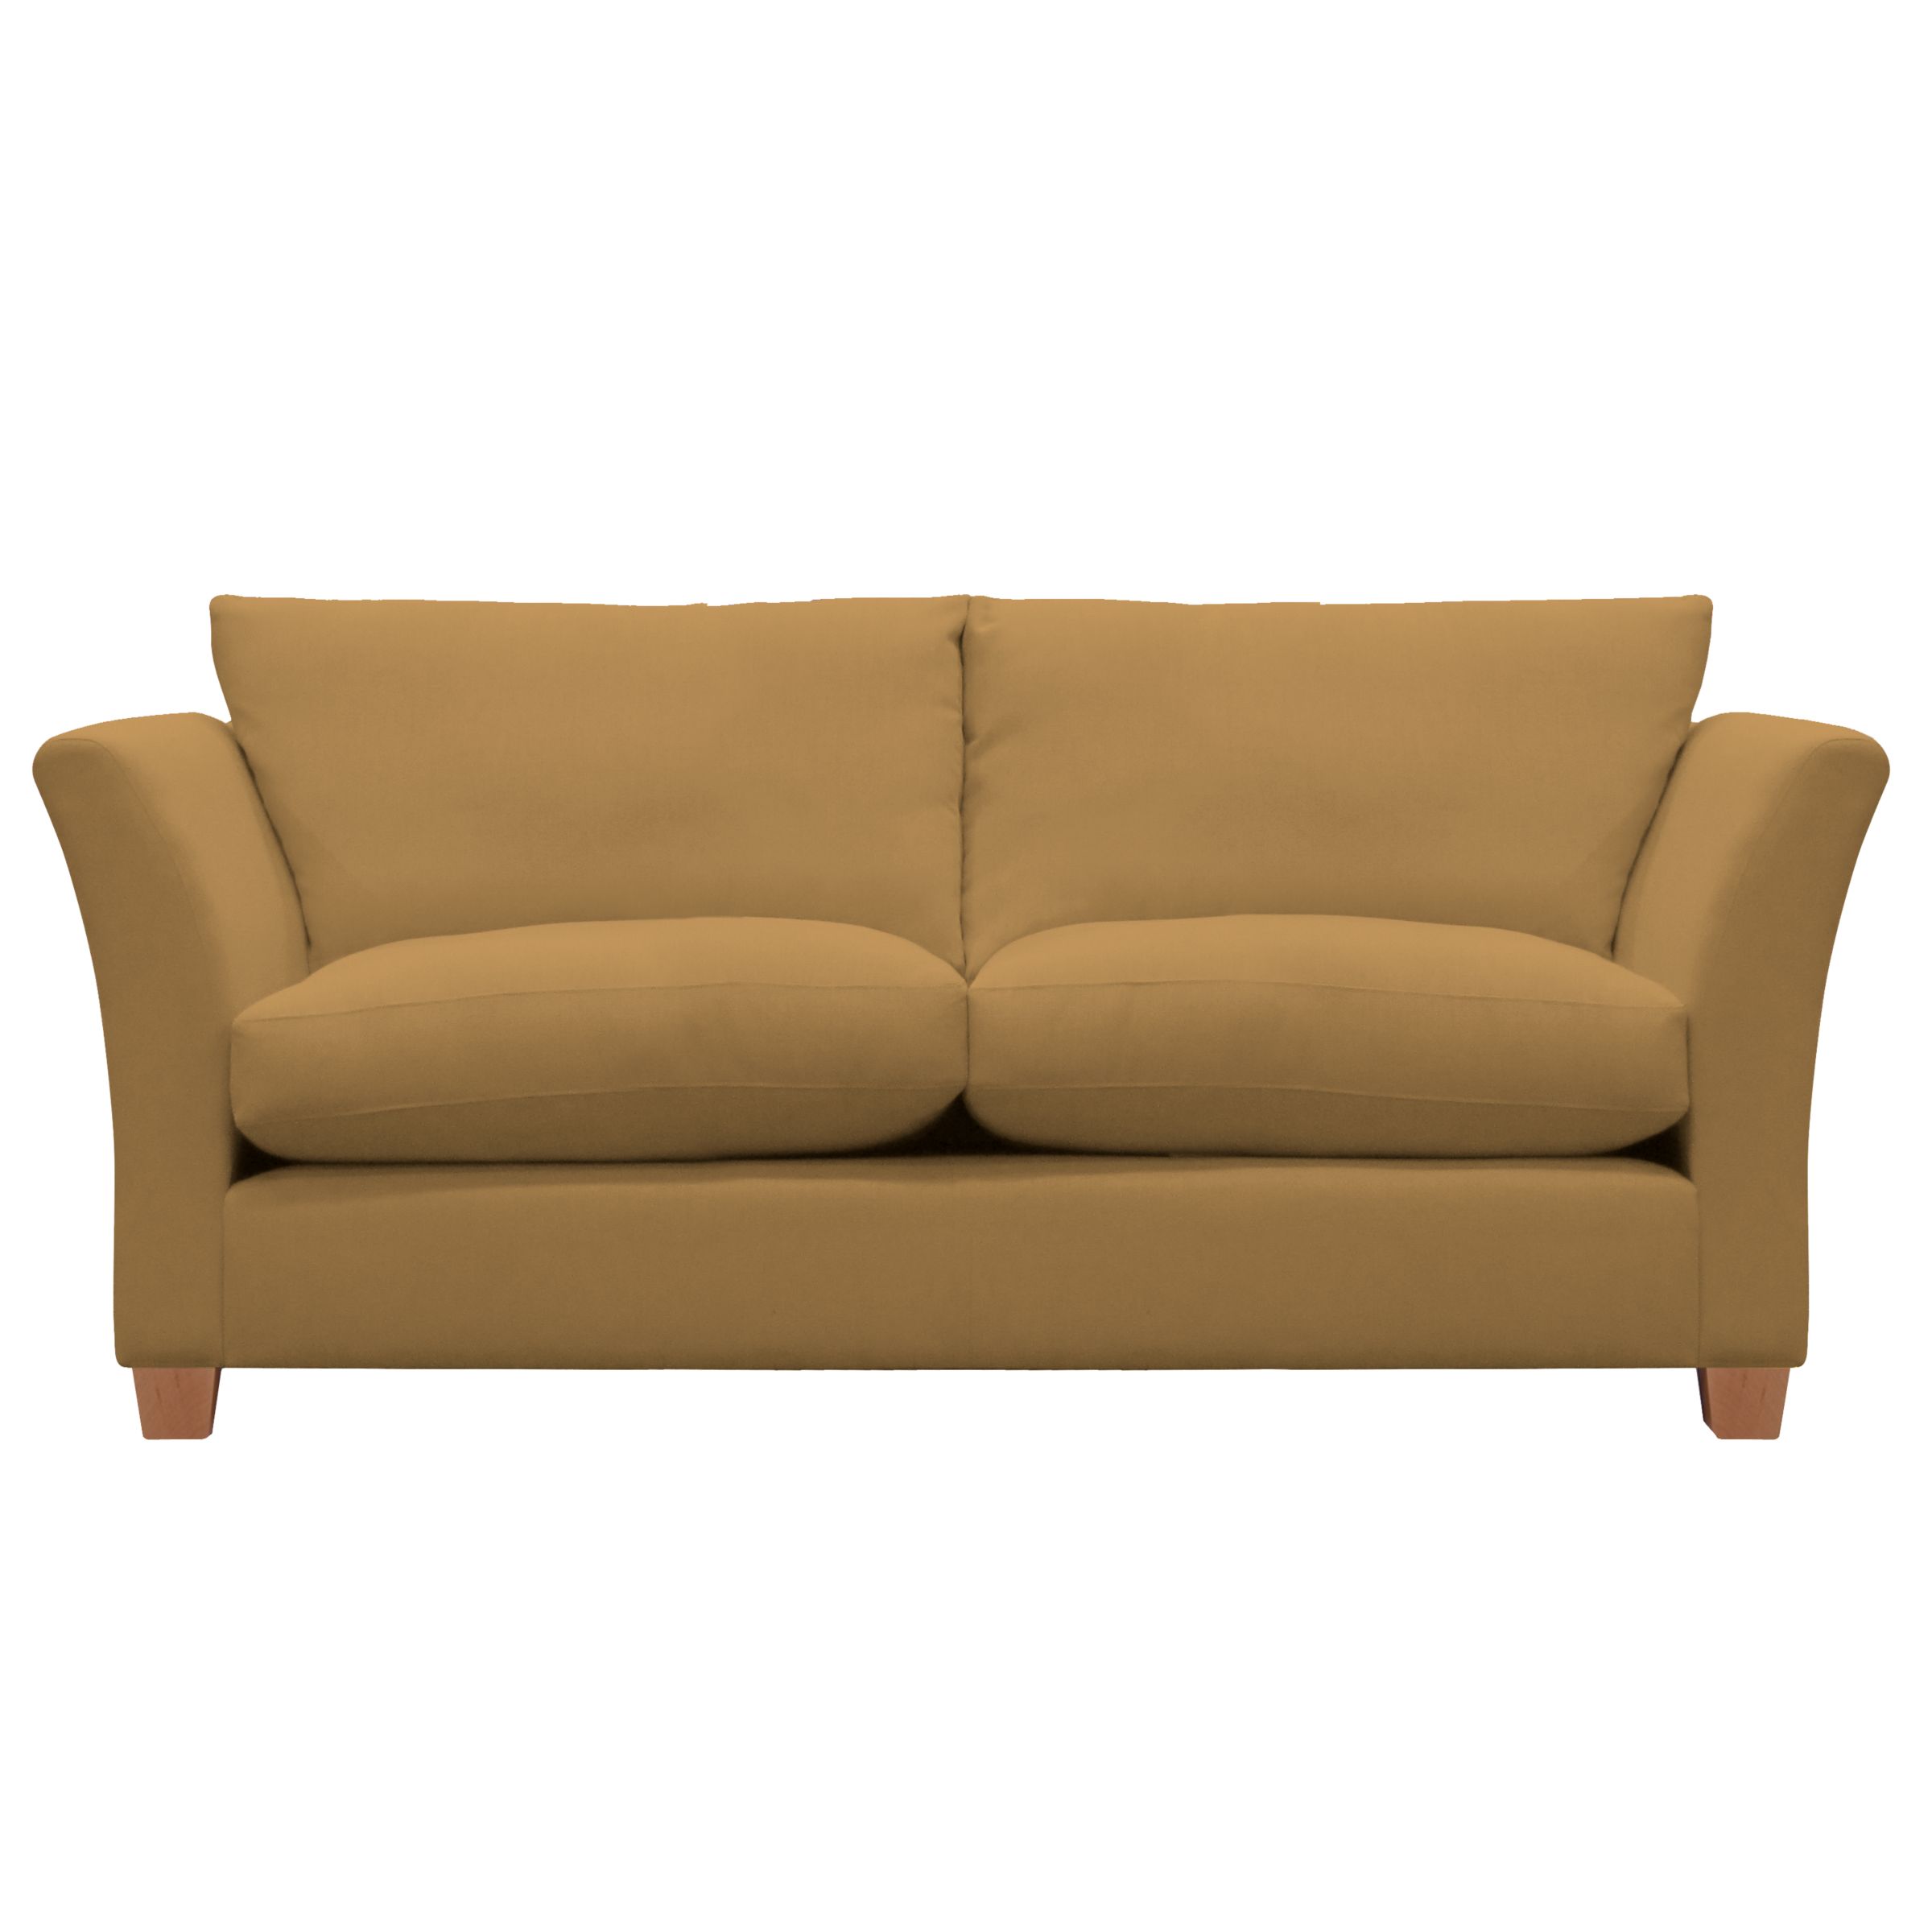 John Lewis Options Flare Arm Large Sofa, Linley Cafe, width 200cm